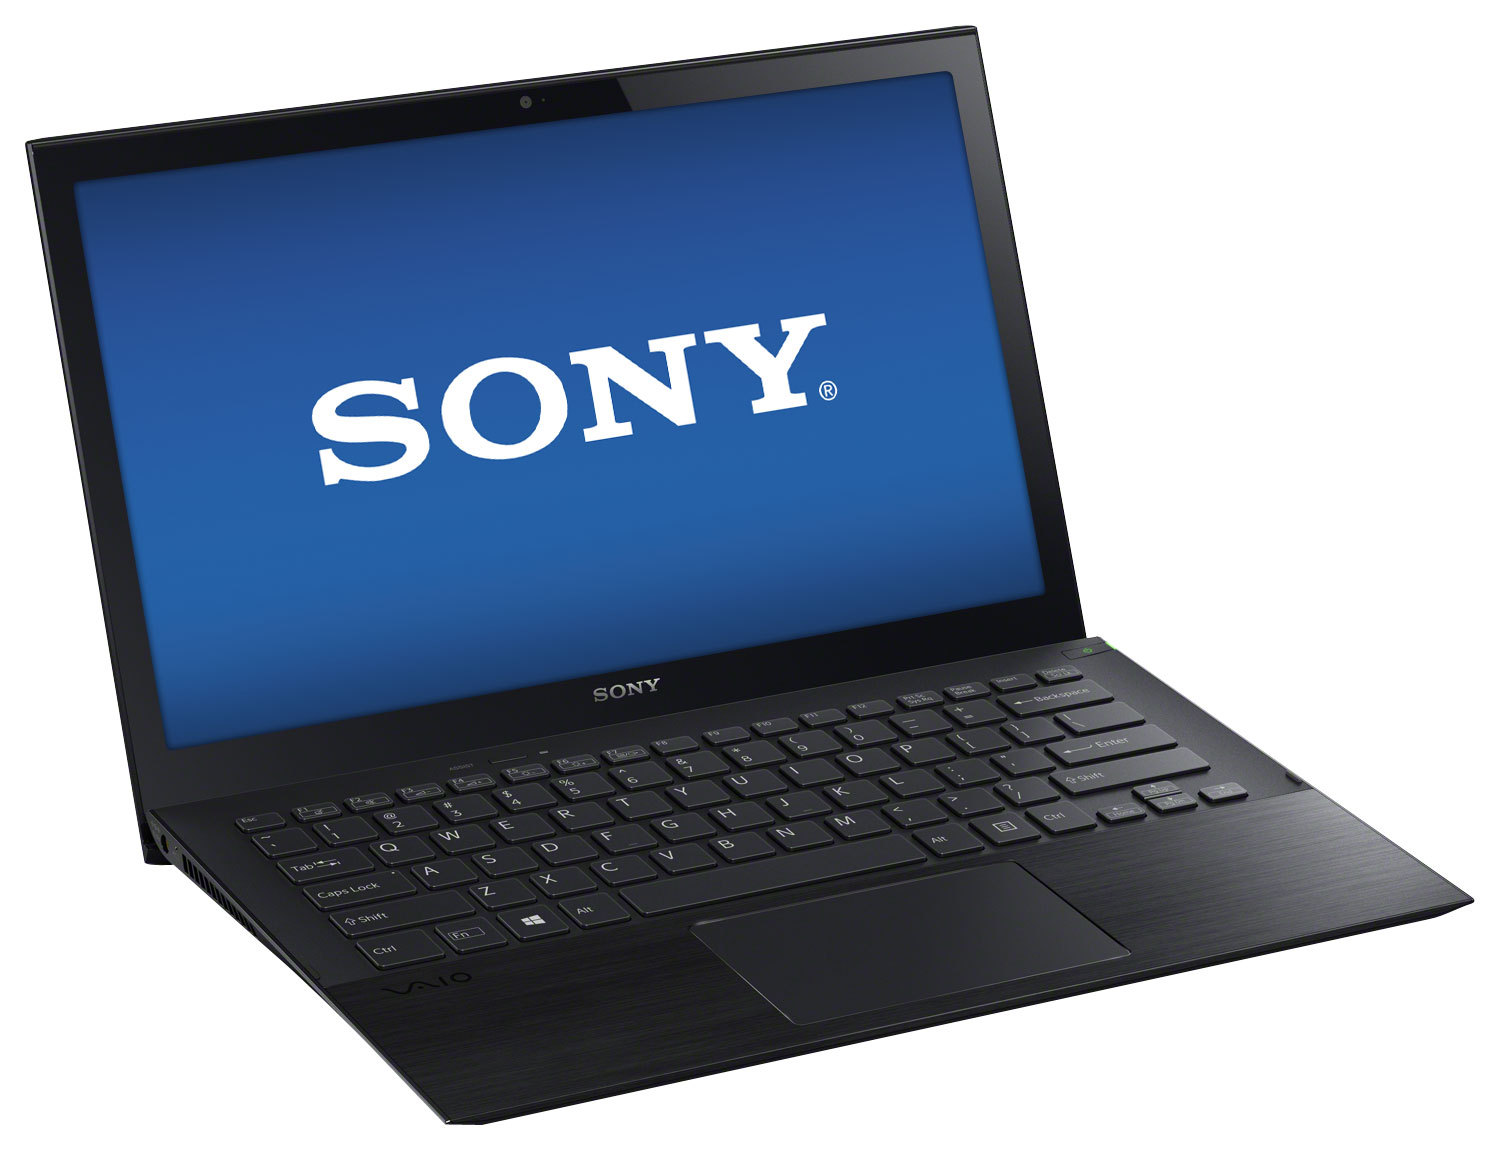 Sony VAIO Pro Ultrabook 13.3